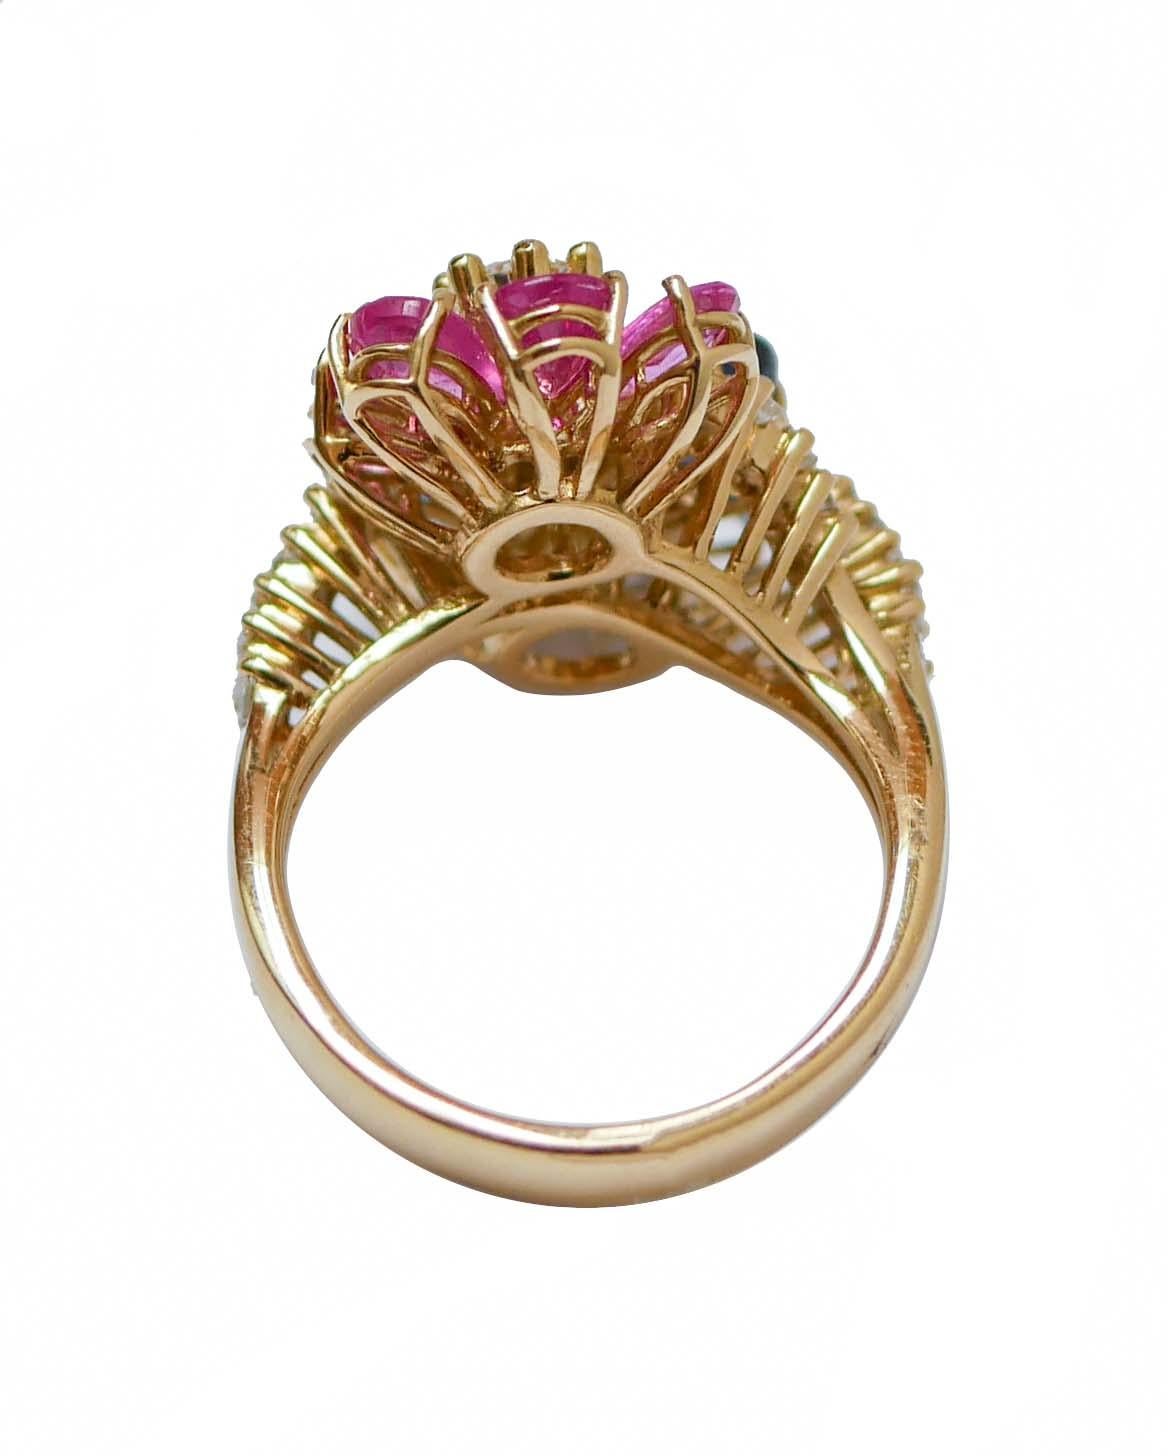 Mixed Cut Rubies, Sapphires, Diamonds, 18 Karat Yellow Gold Ring. For Sale